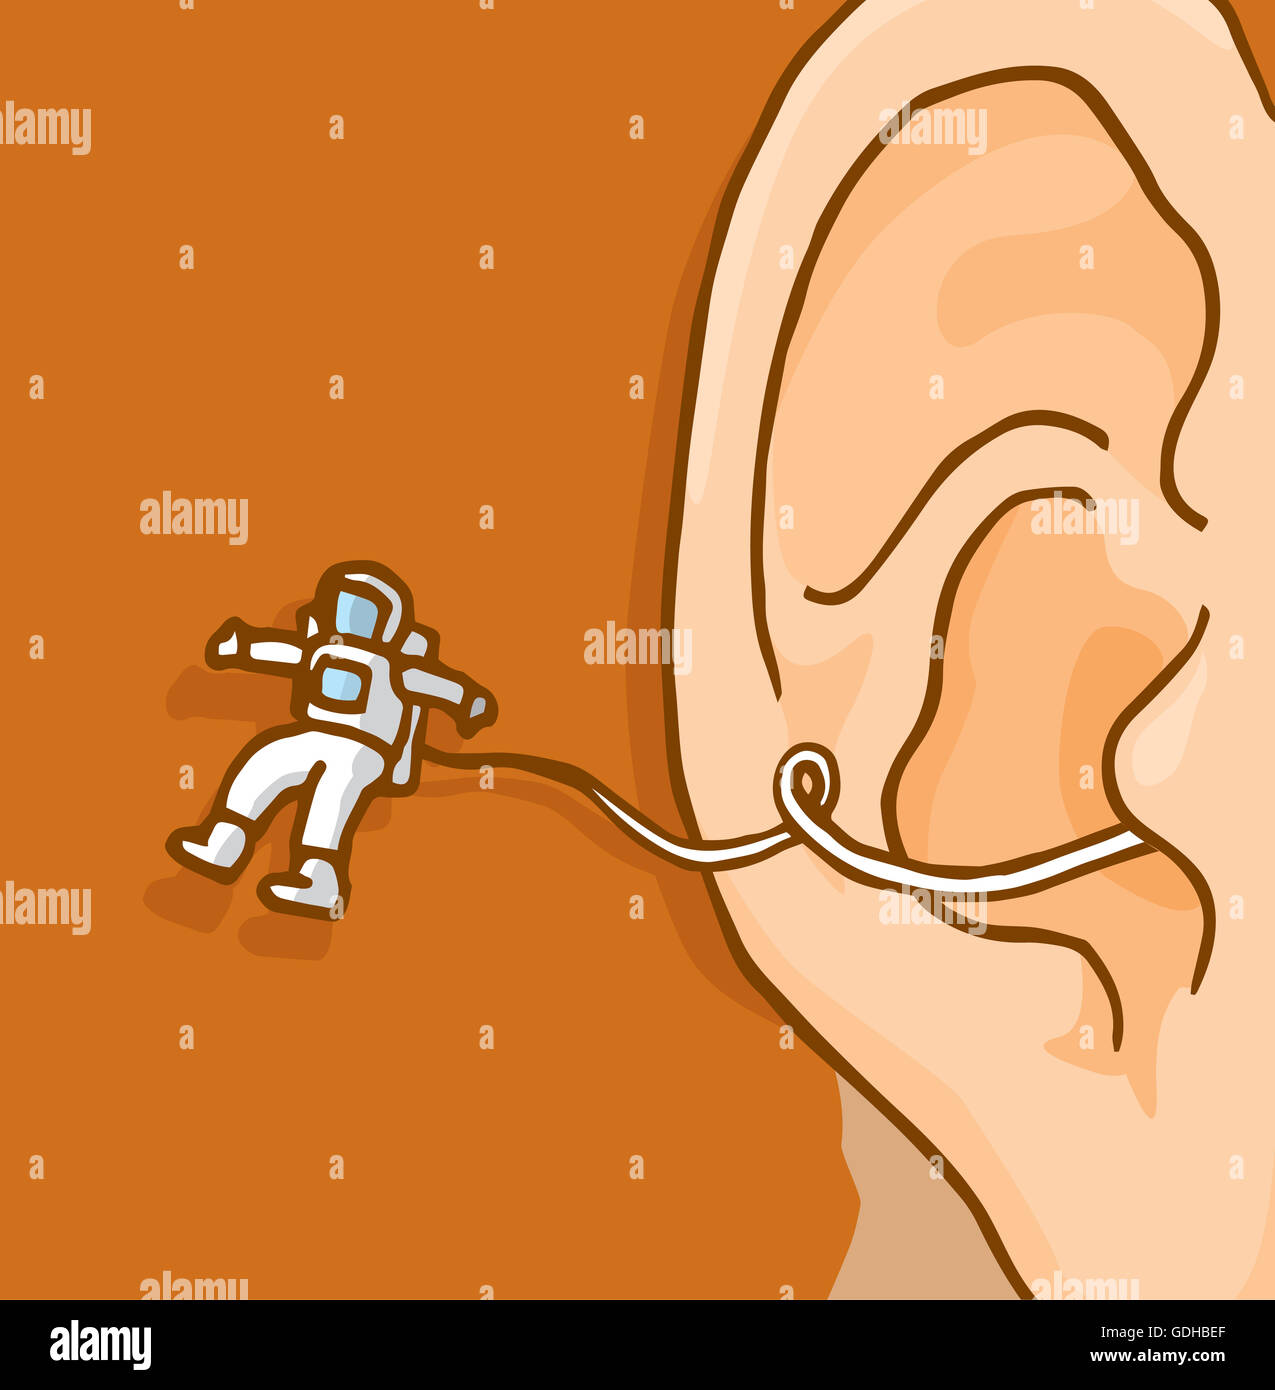 Cartoon illustration of astronaut exploring human mind Stock Photo